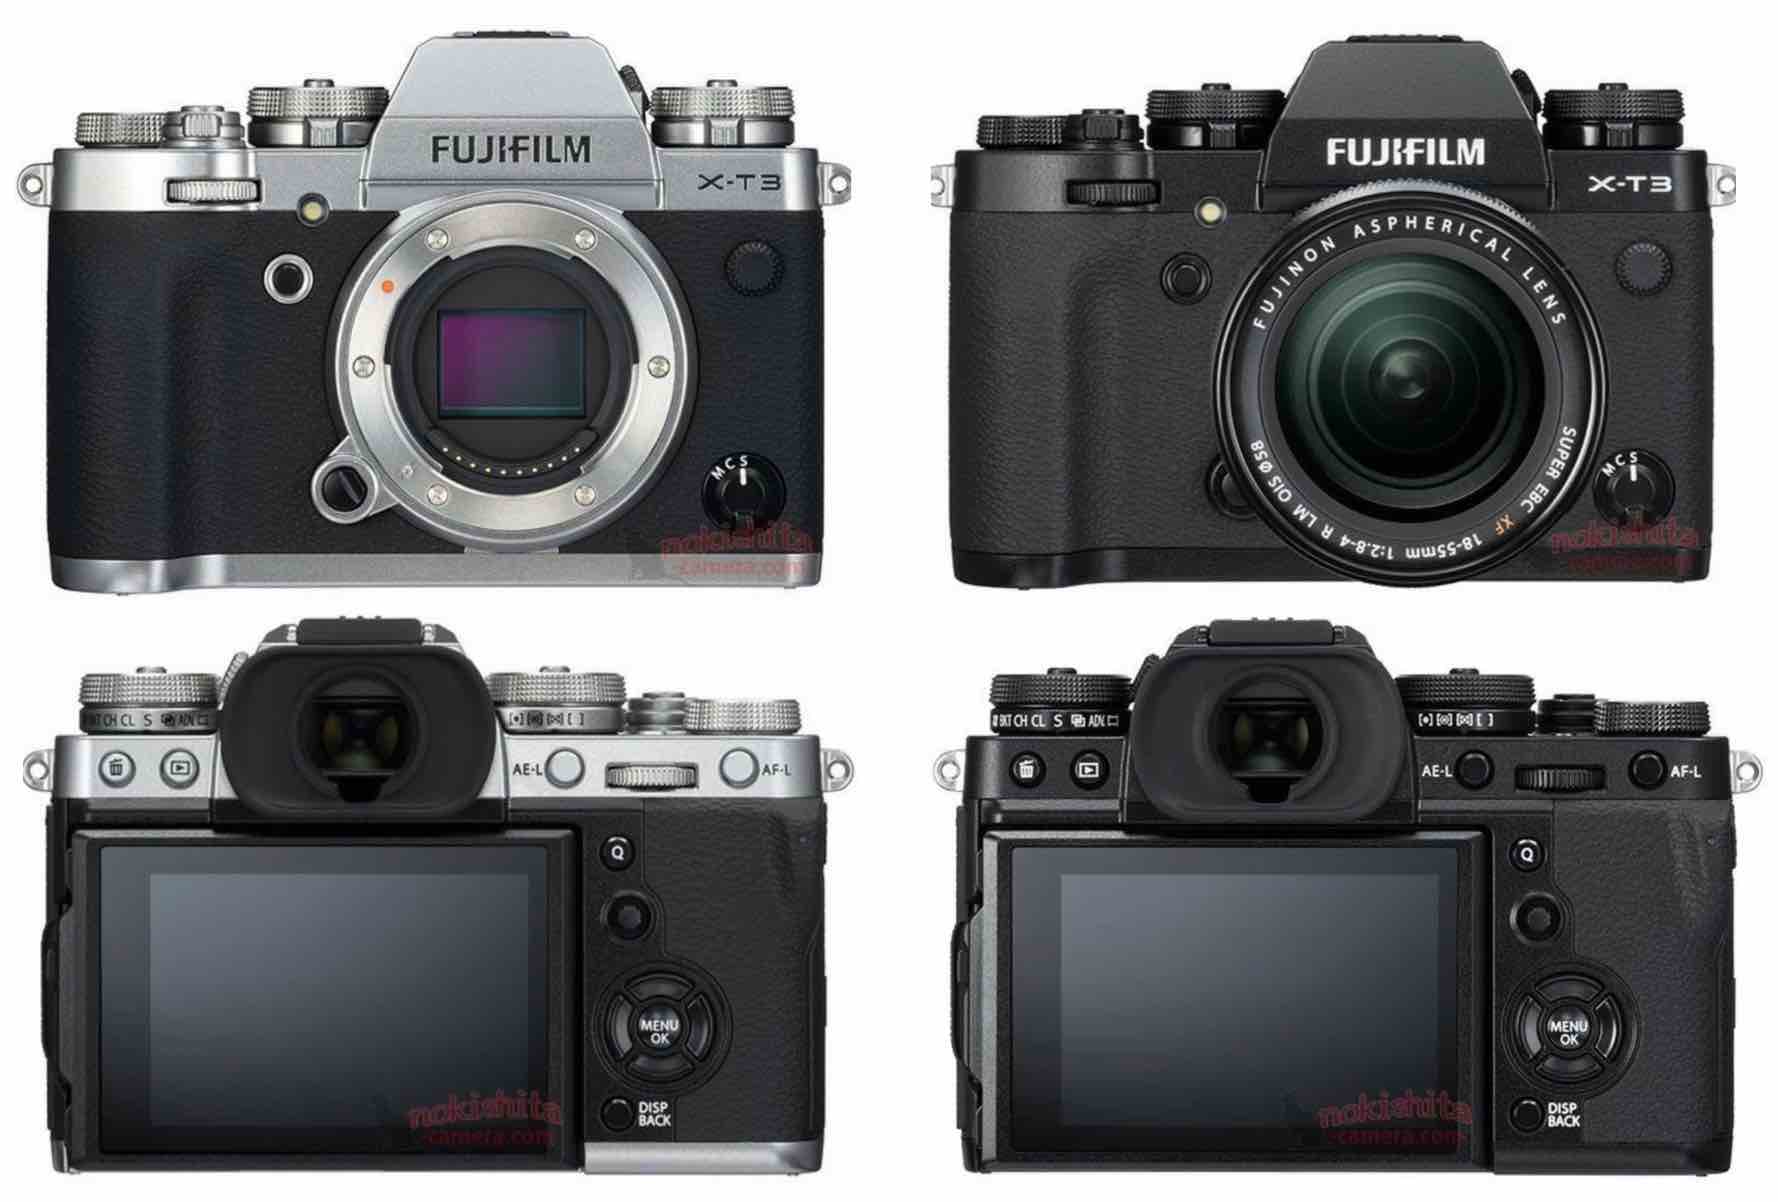 ENOUGH of Fujifilm X-T3 SPECS, Let's Talk Beauty! Black or Silver 